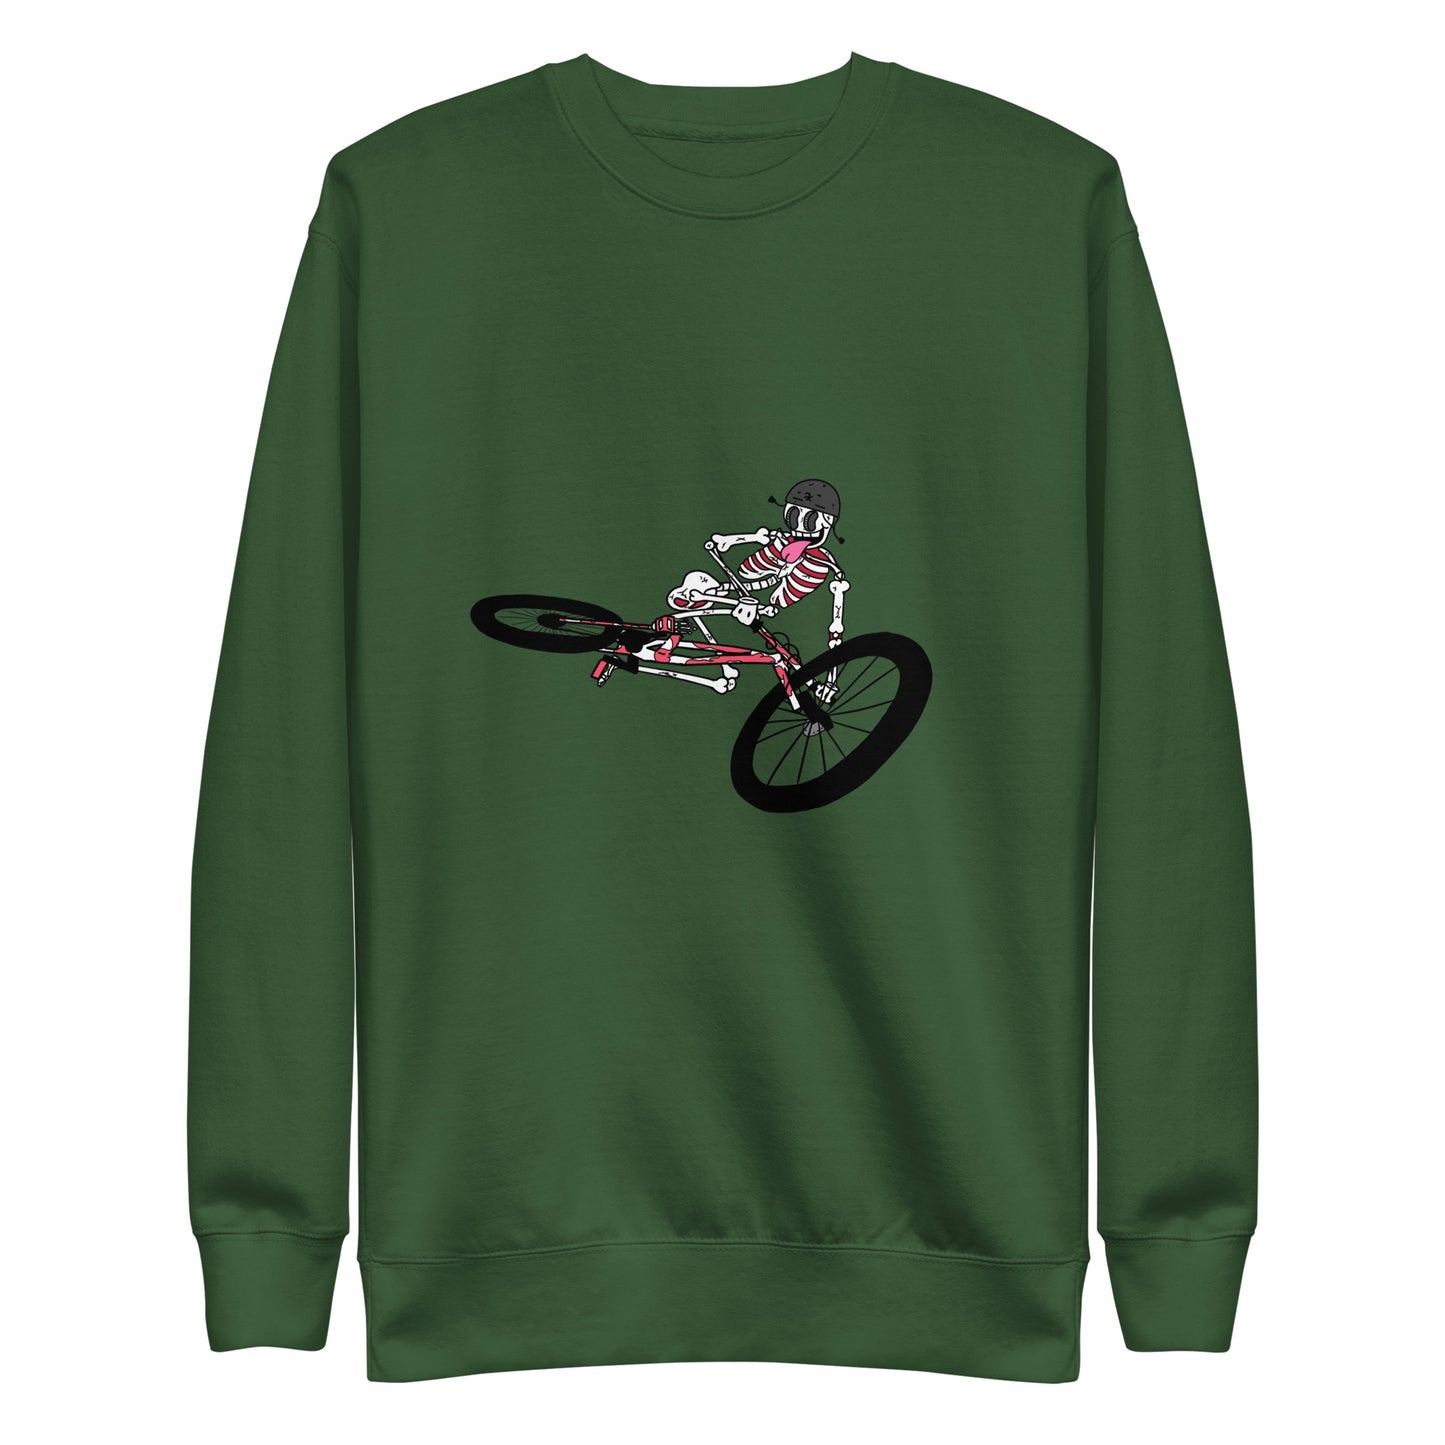 Skelton Rider - Unisex Premium Sweatshirt